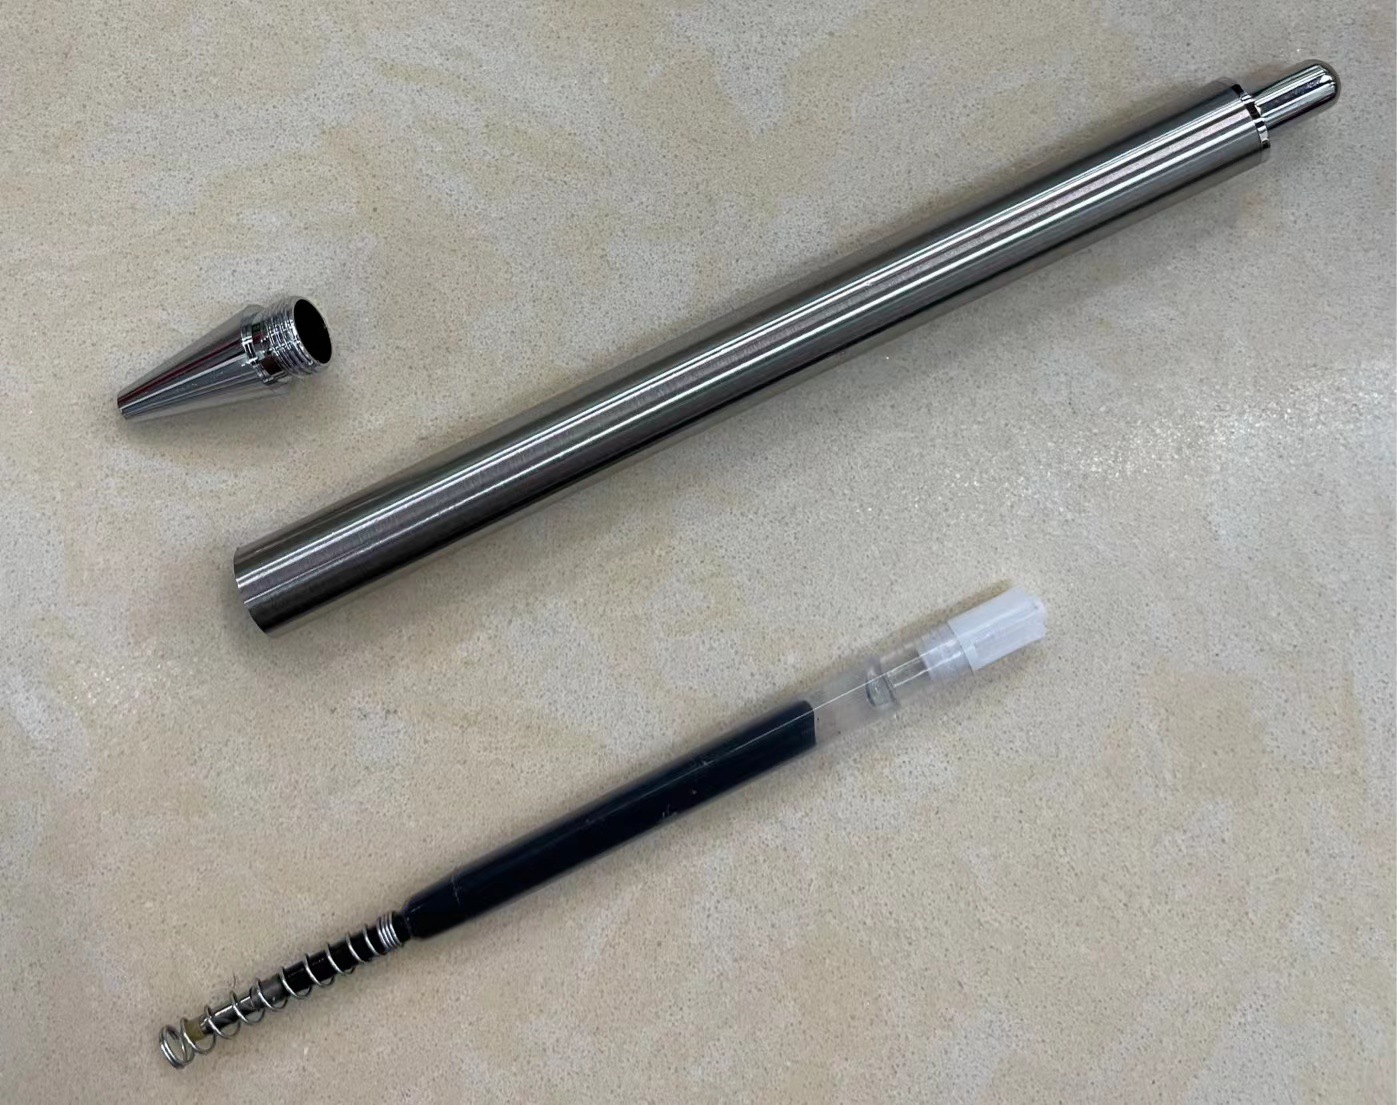 Factory Wholesale Stainless Steel Ballpoint Pen Full Pen Press Gel Pen Retractable Ballpoint Pen Metal Pen